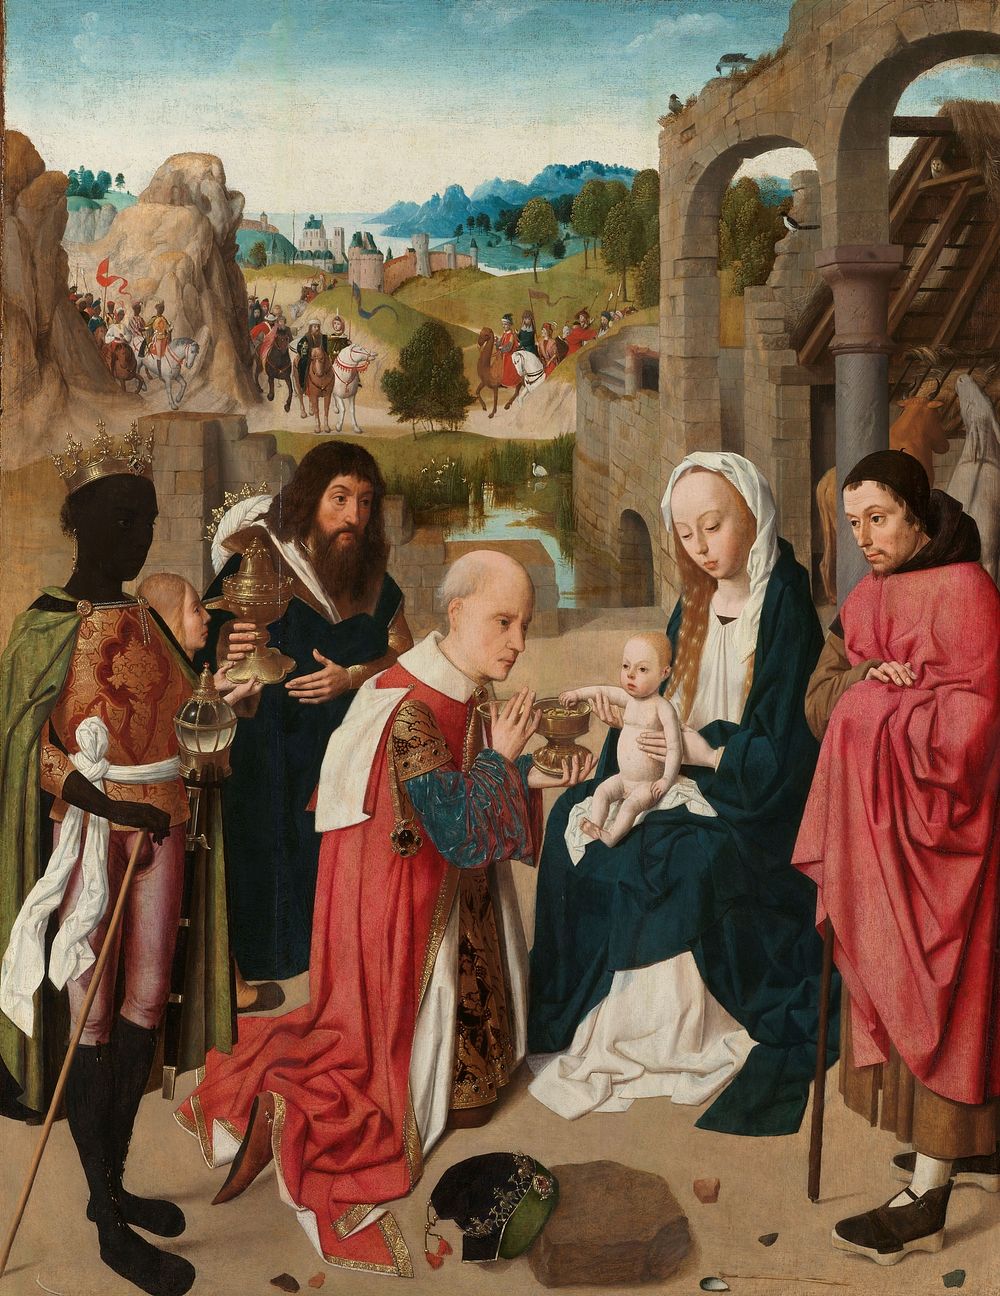 The Adoration of the Magi (c. 1480 - c. 1485) by Geertgen tot Sint Jans